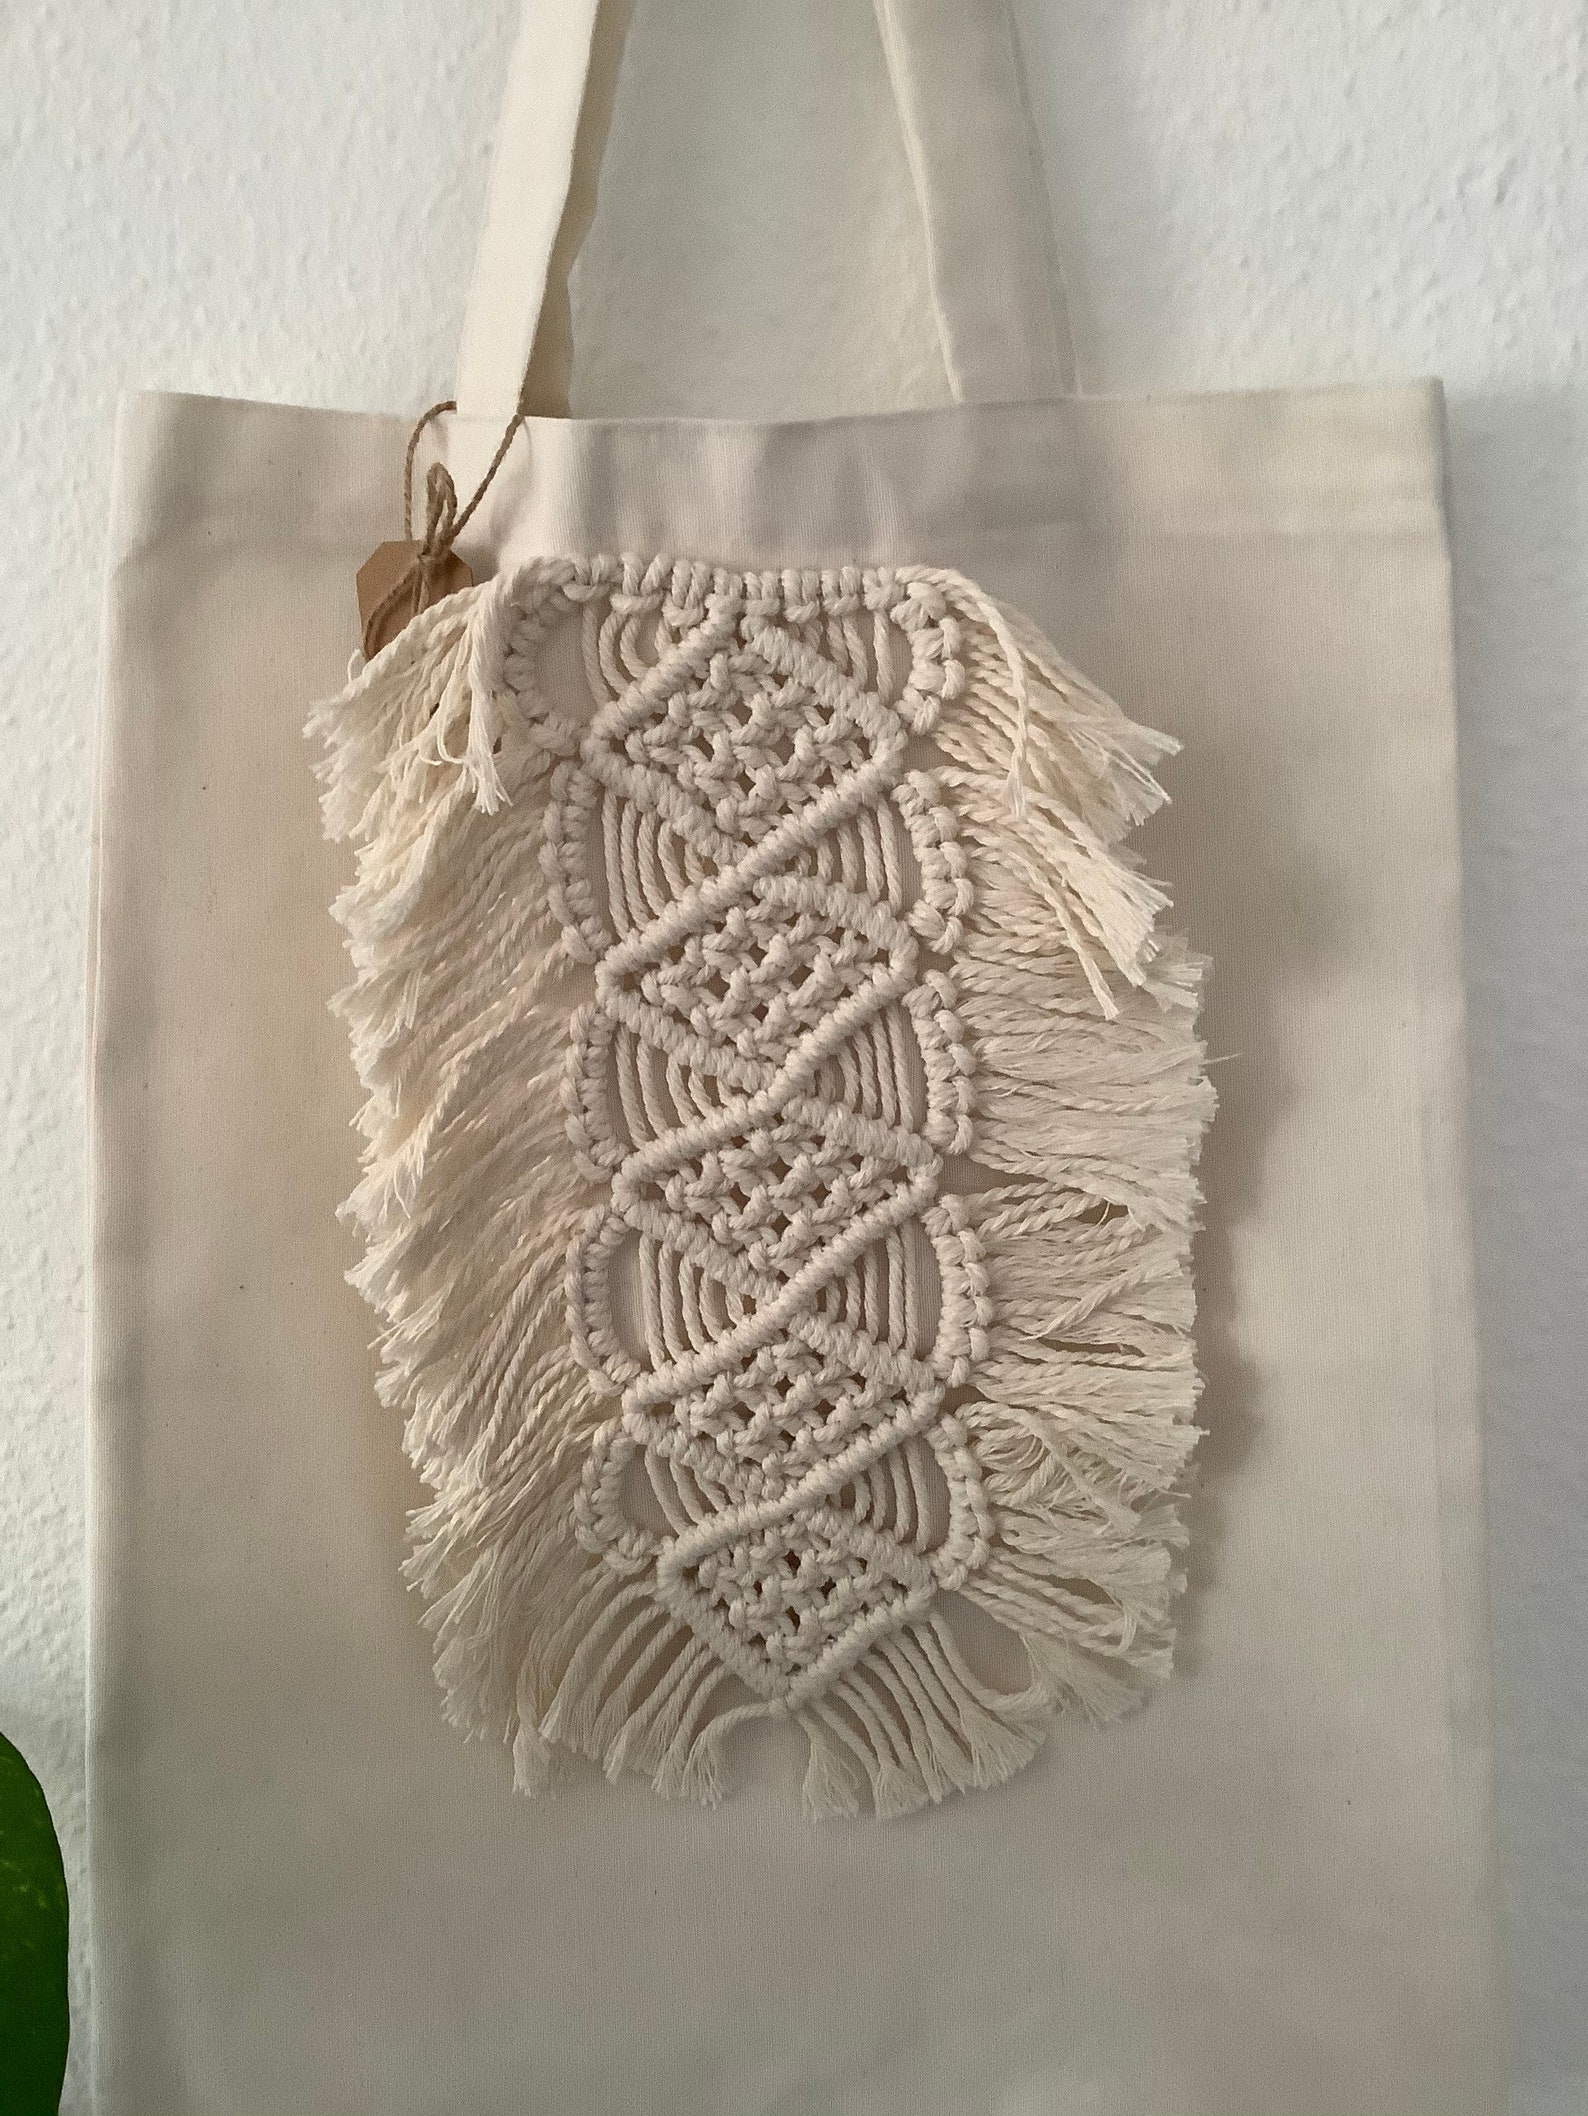 Tote Bag with Macramé Design / Ecological Shopping Bag / Boho | Etsy